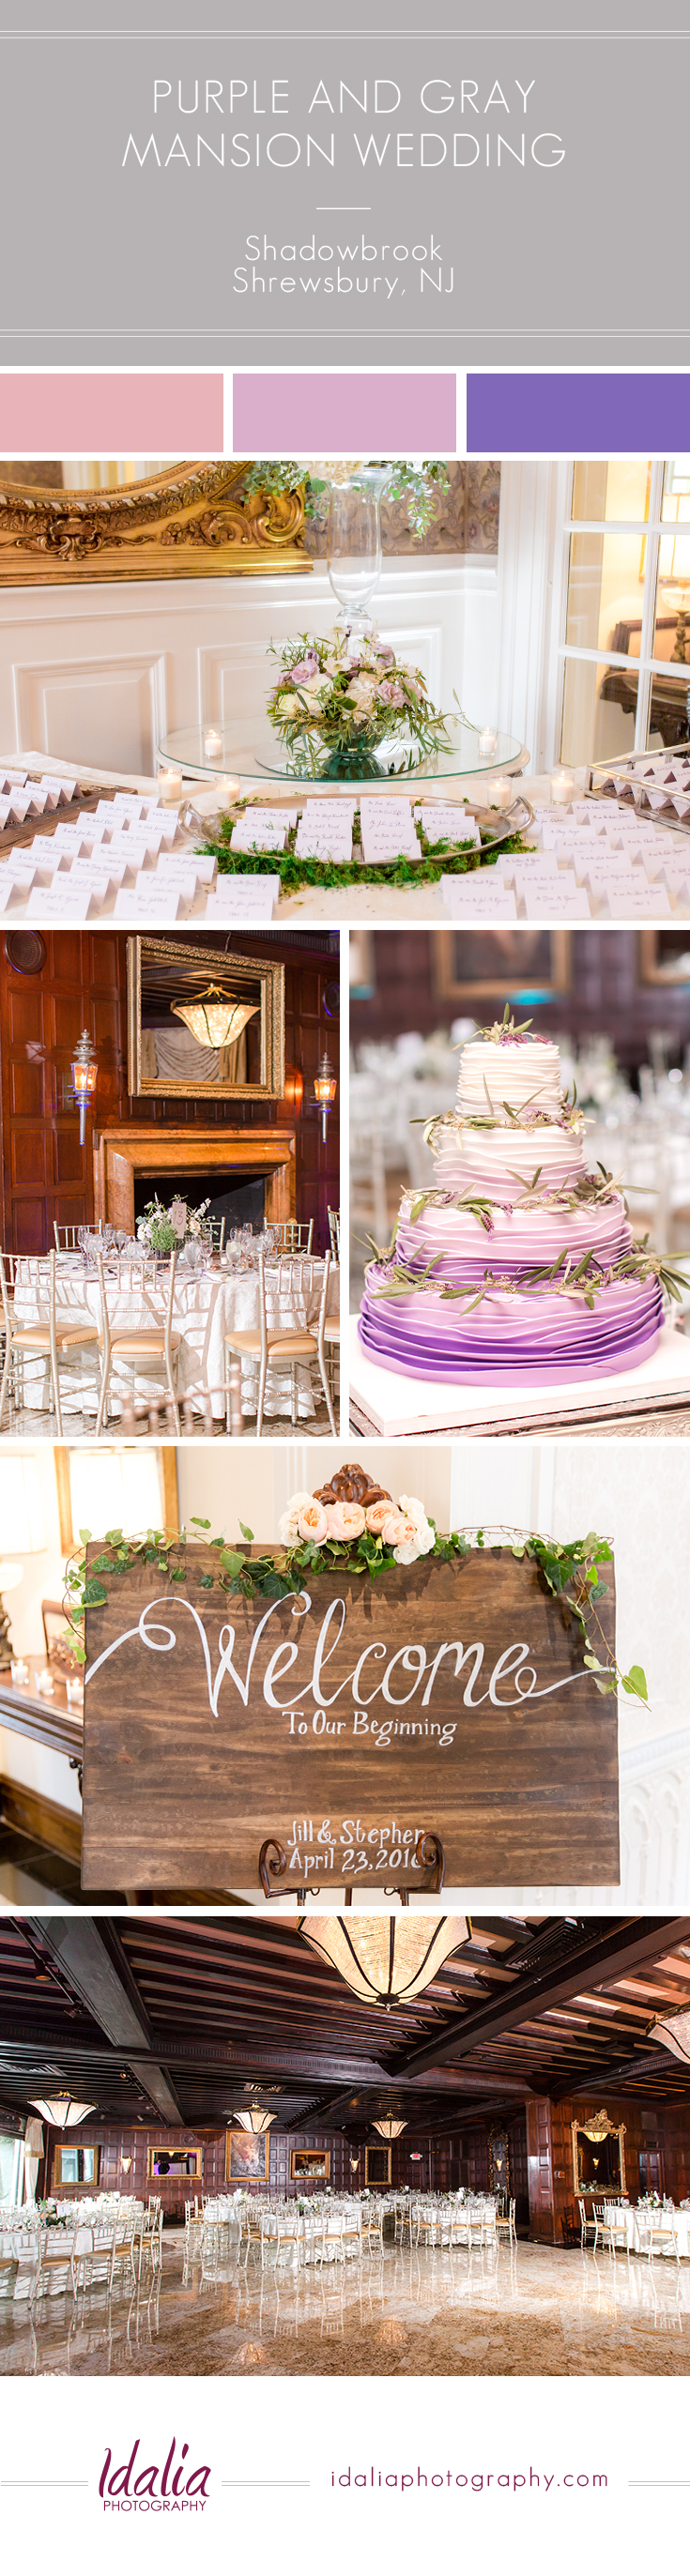 Shadowbrook NJ Wedding Reception Ideas | Shrewsbury NJ | Photo by Idalia Photography